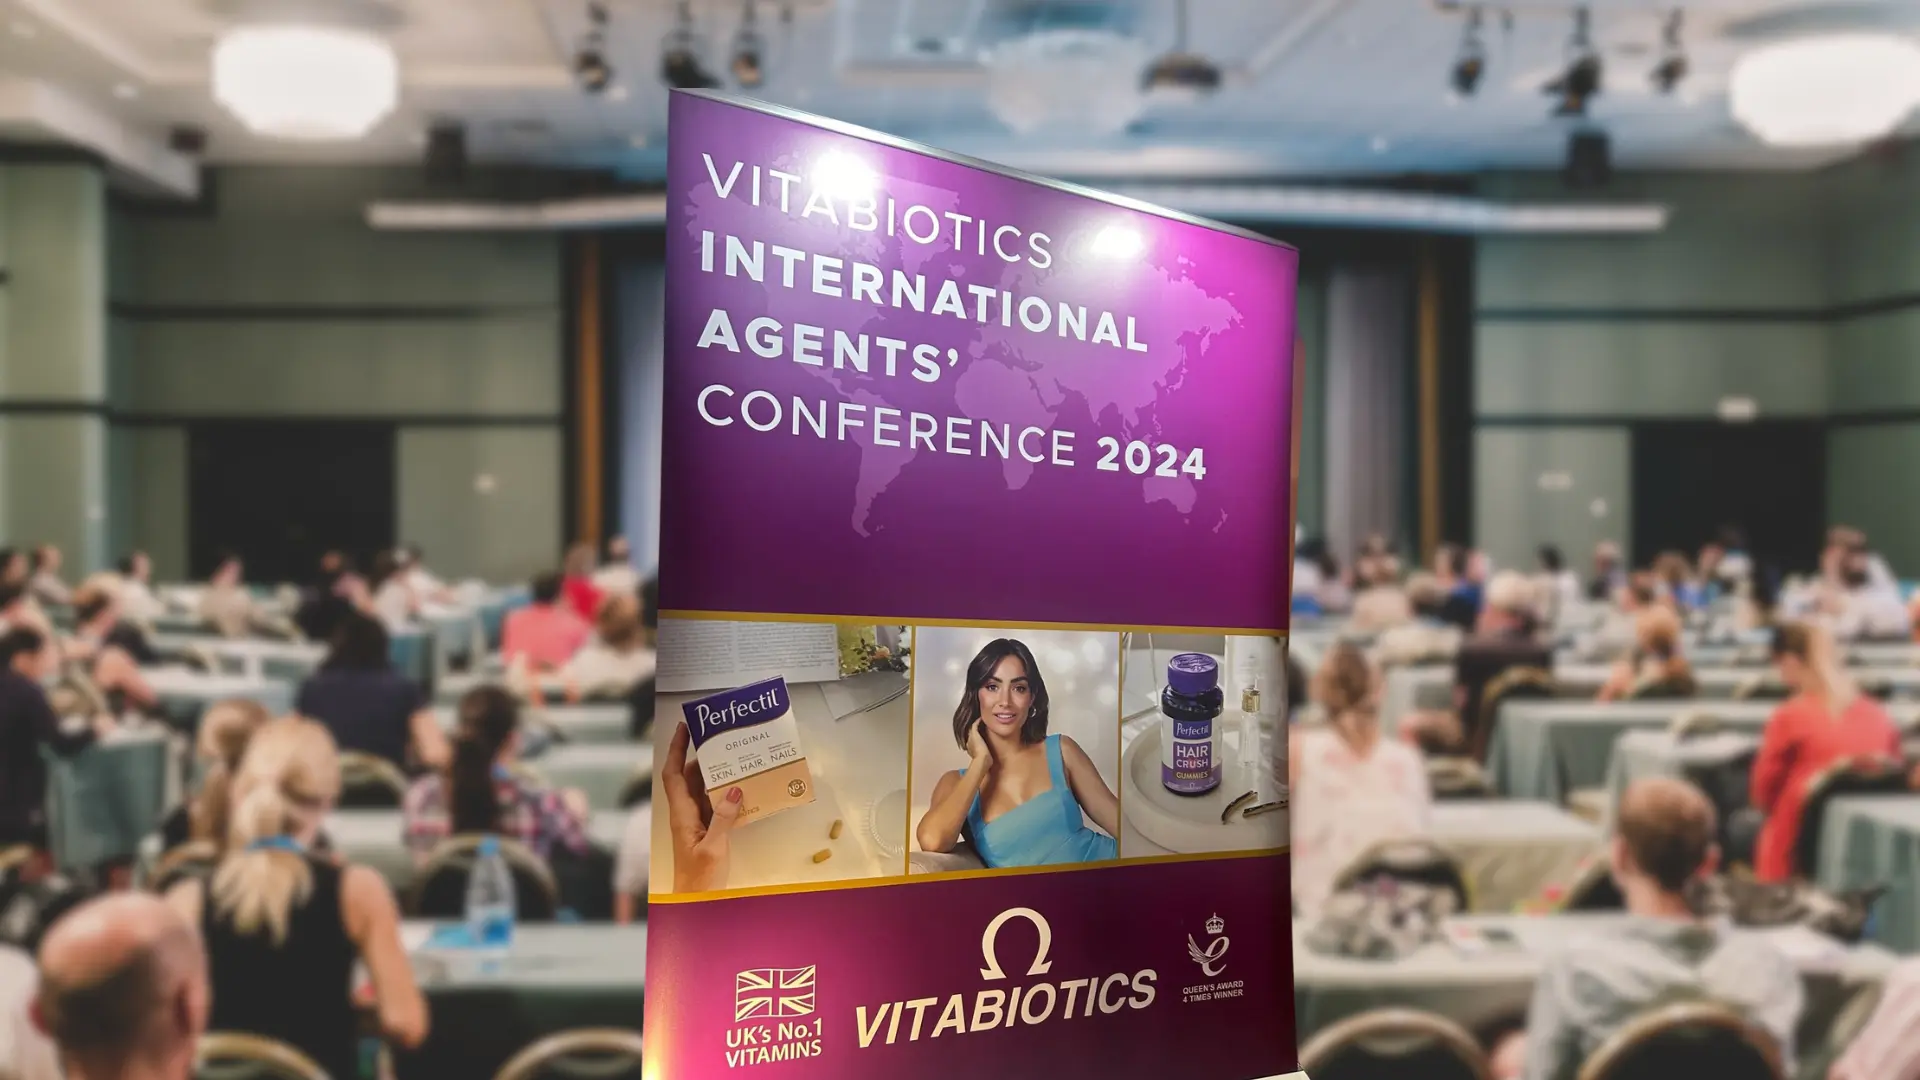 Vitabiotics international agents conference